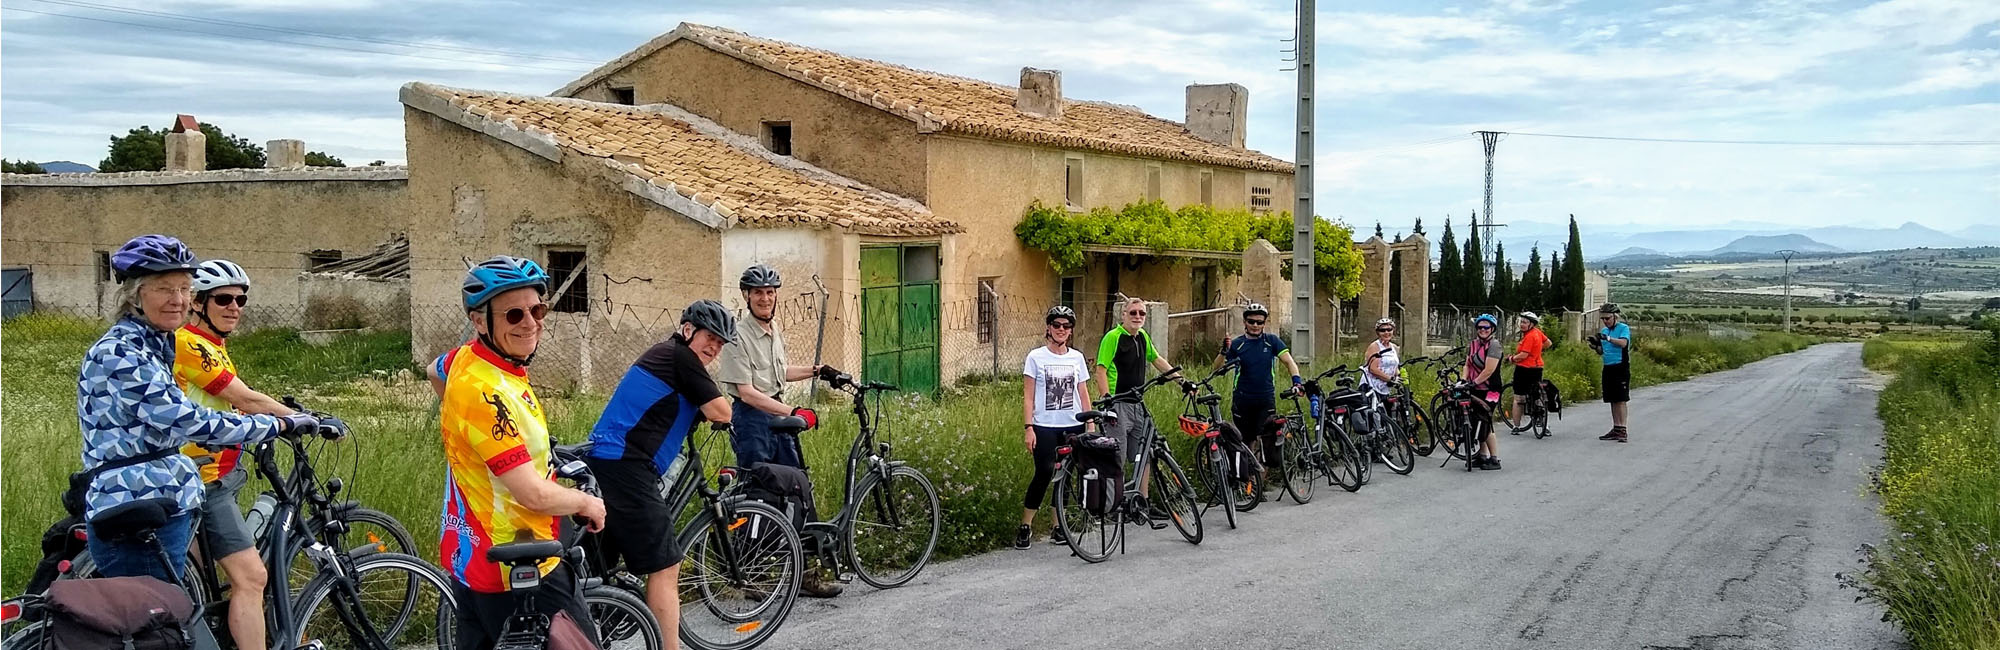 (c) Spanish-biketours.com